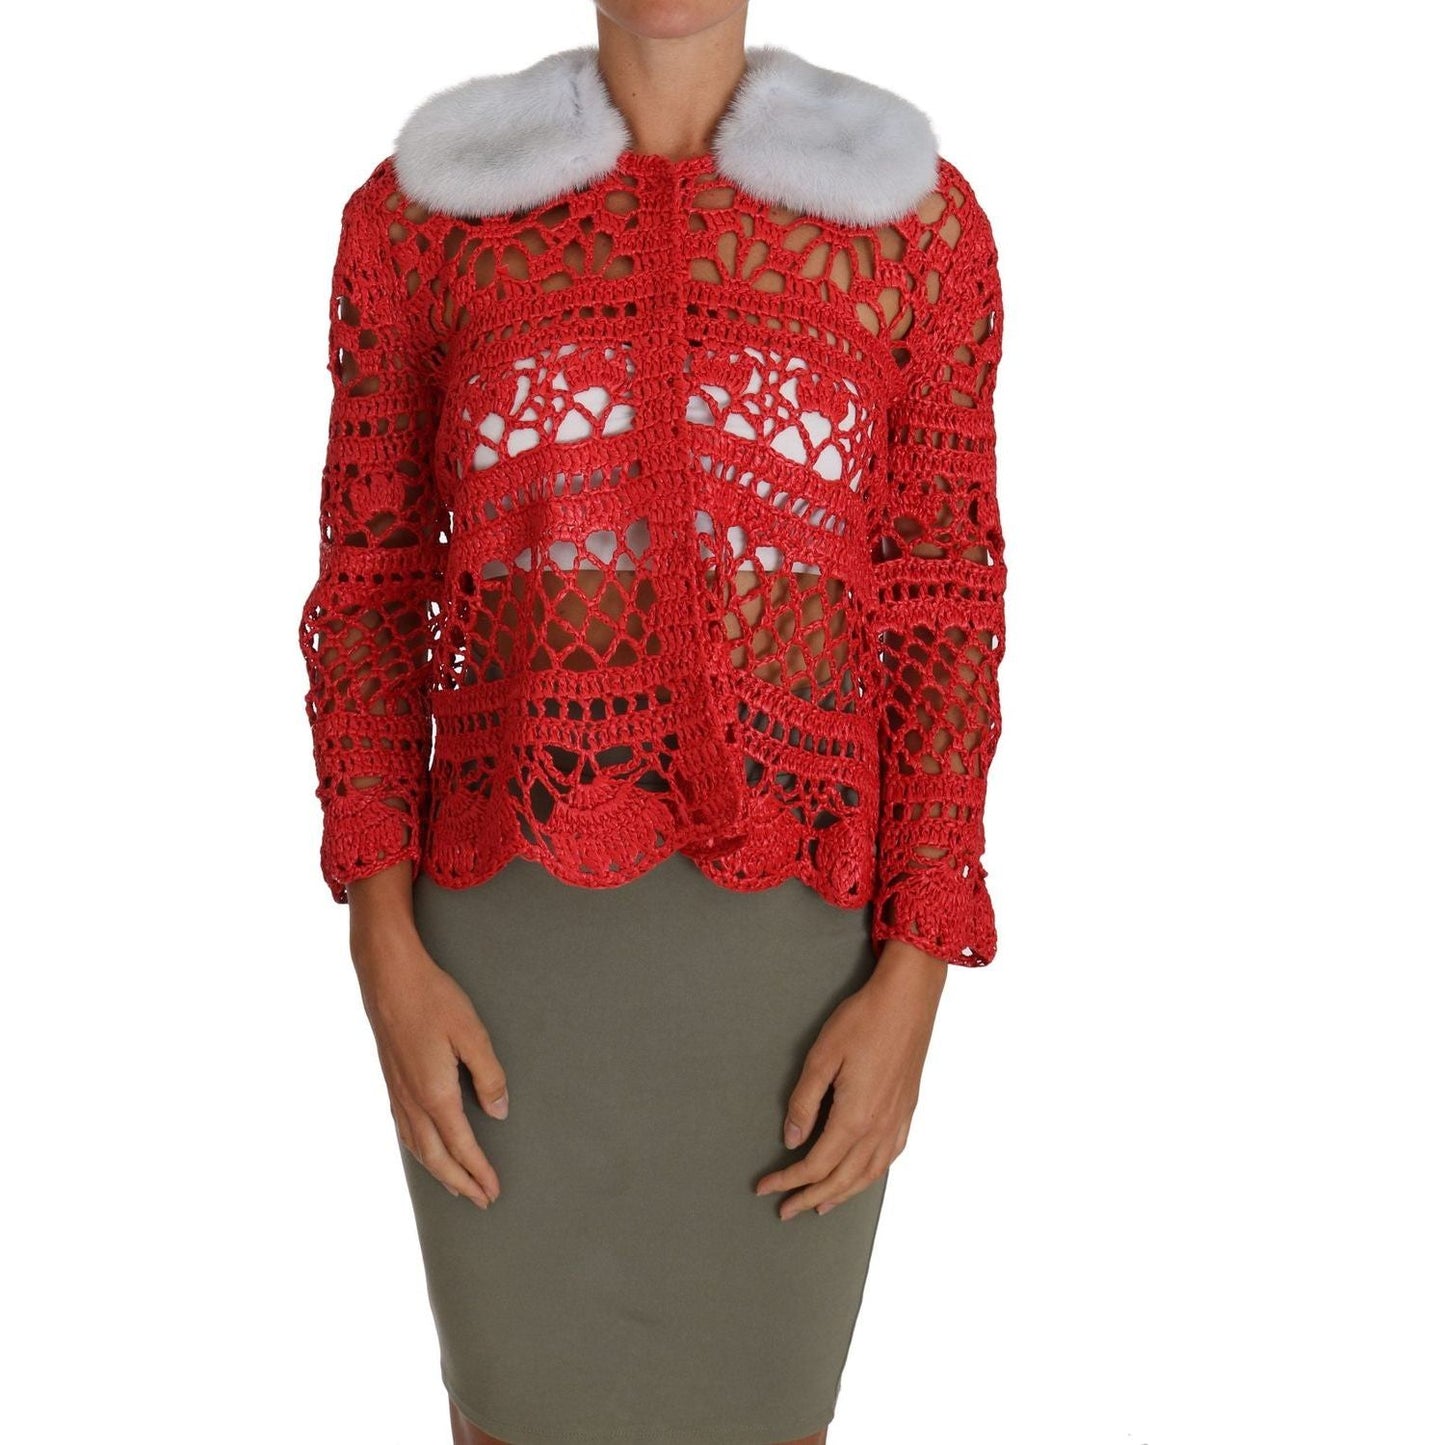 Dolce & Gabbana Elegant Red Crochet Knit Cardigan with Fur Collar red-cardigan-crochet-knit-raffia-sweater 648775-red-cardigan-crochet-knit-raffia-sweater.jpg